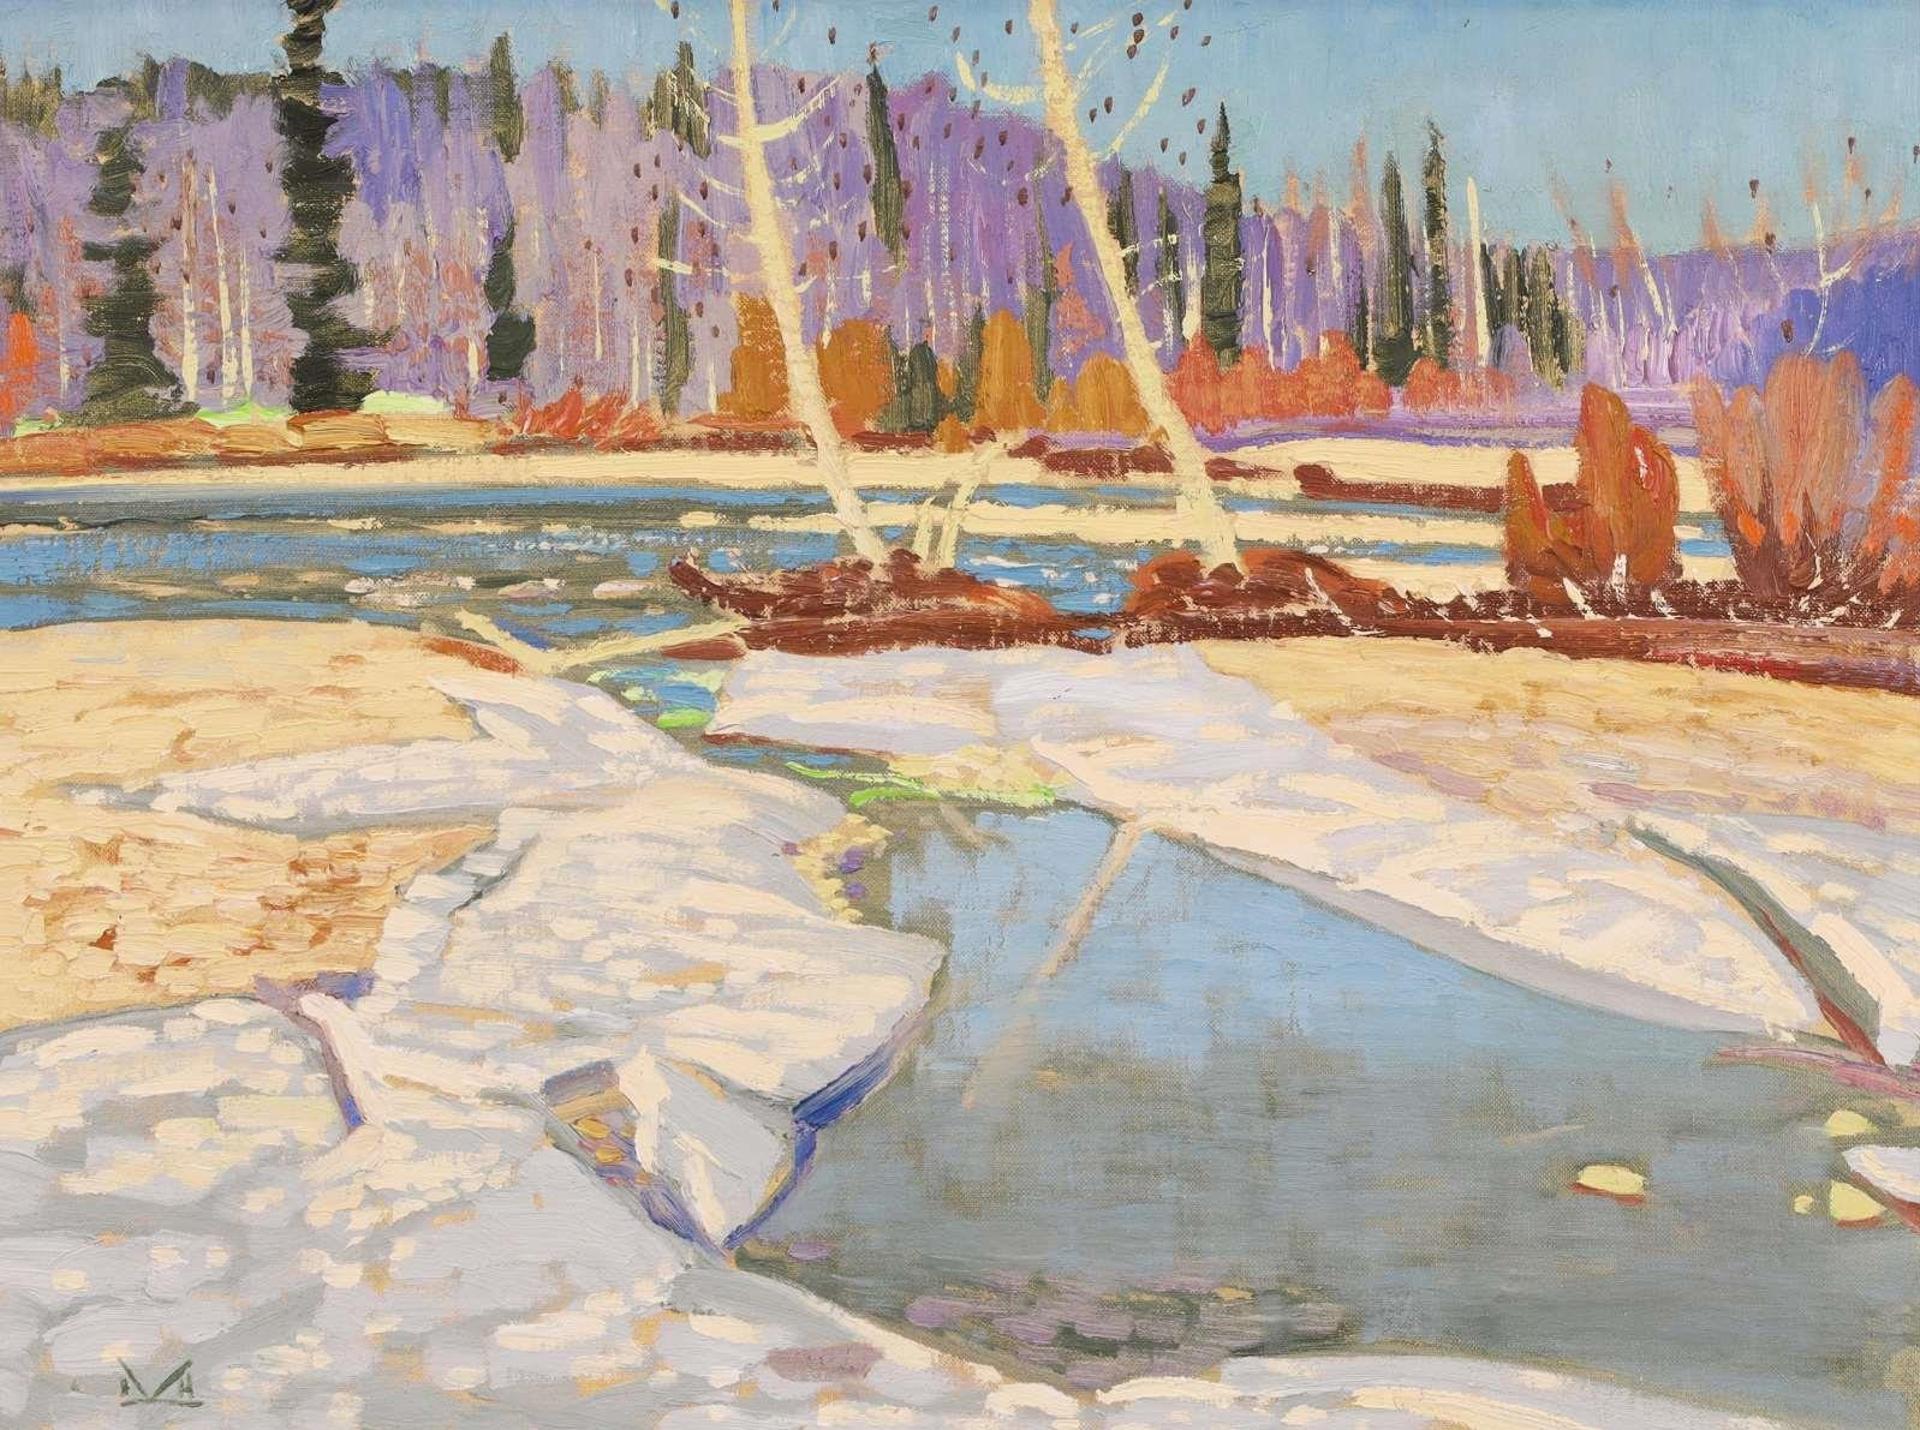 Illingworth Holey (Buck) Kerr (1905-1989) - Channel Ice, Elbow River; 1971